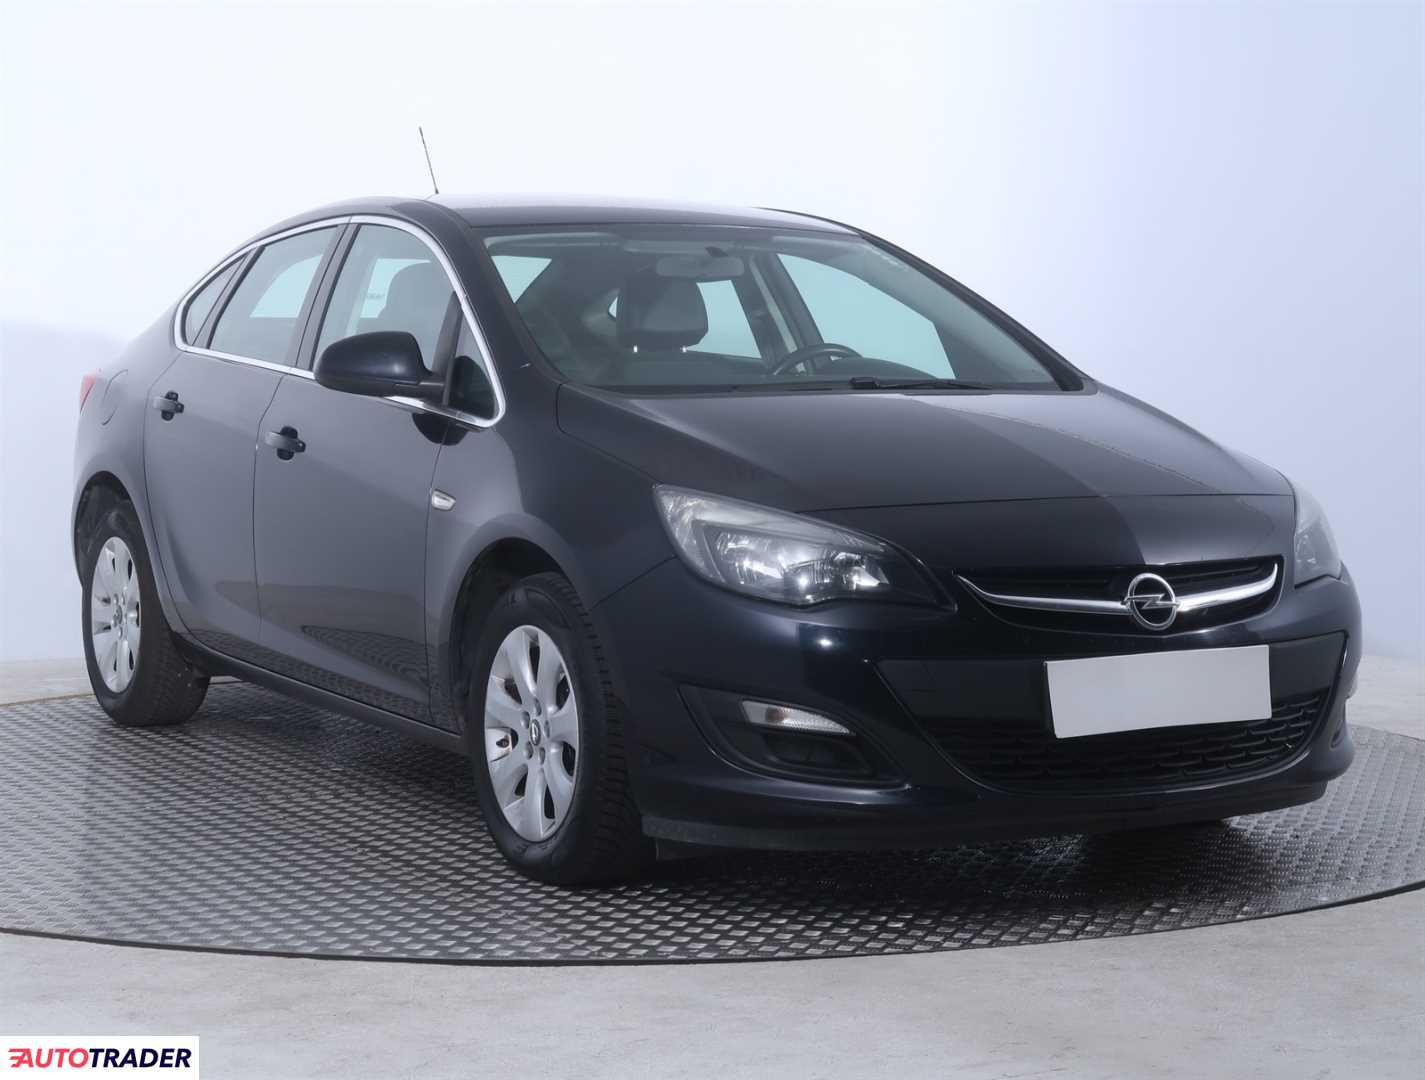 Opel Astra 2018 1.4 138 KM